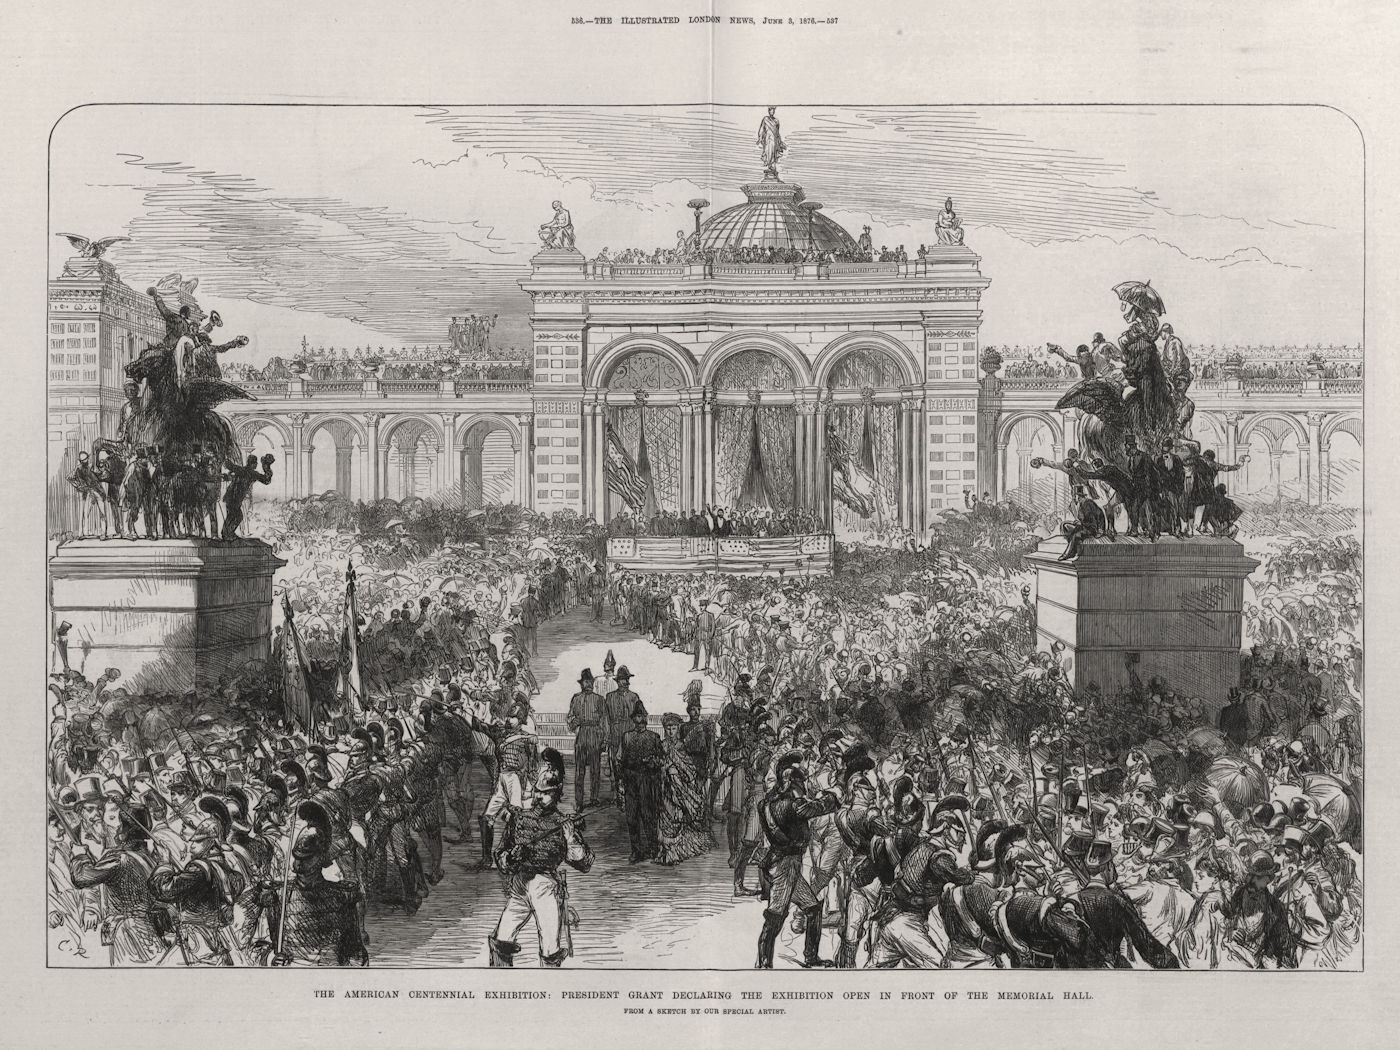 President Grant opening the American Centennial Exhibition, Philadelphia 1876